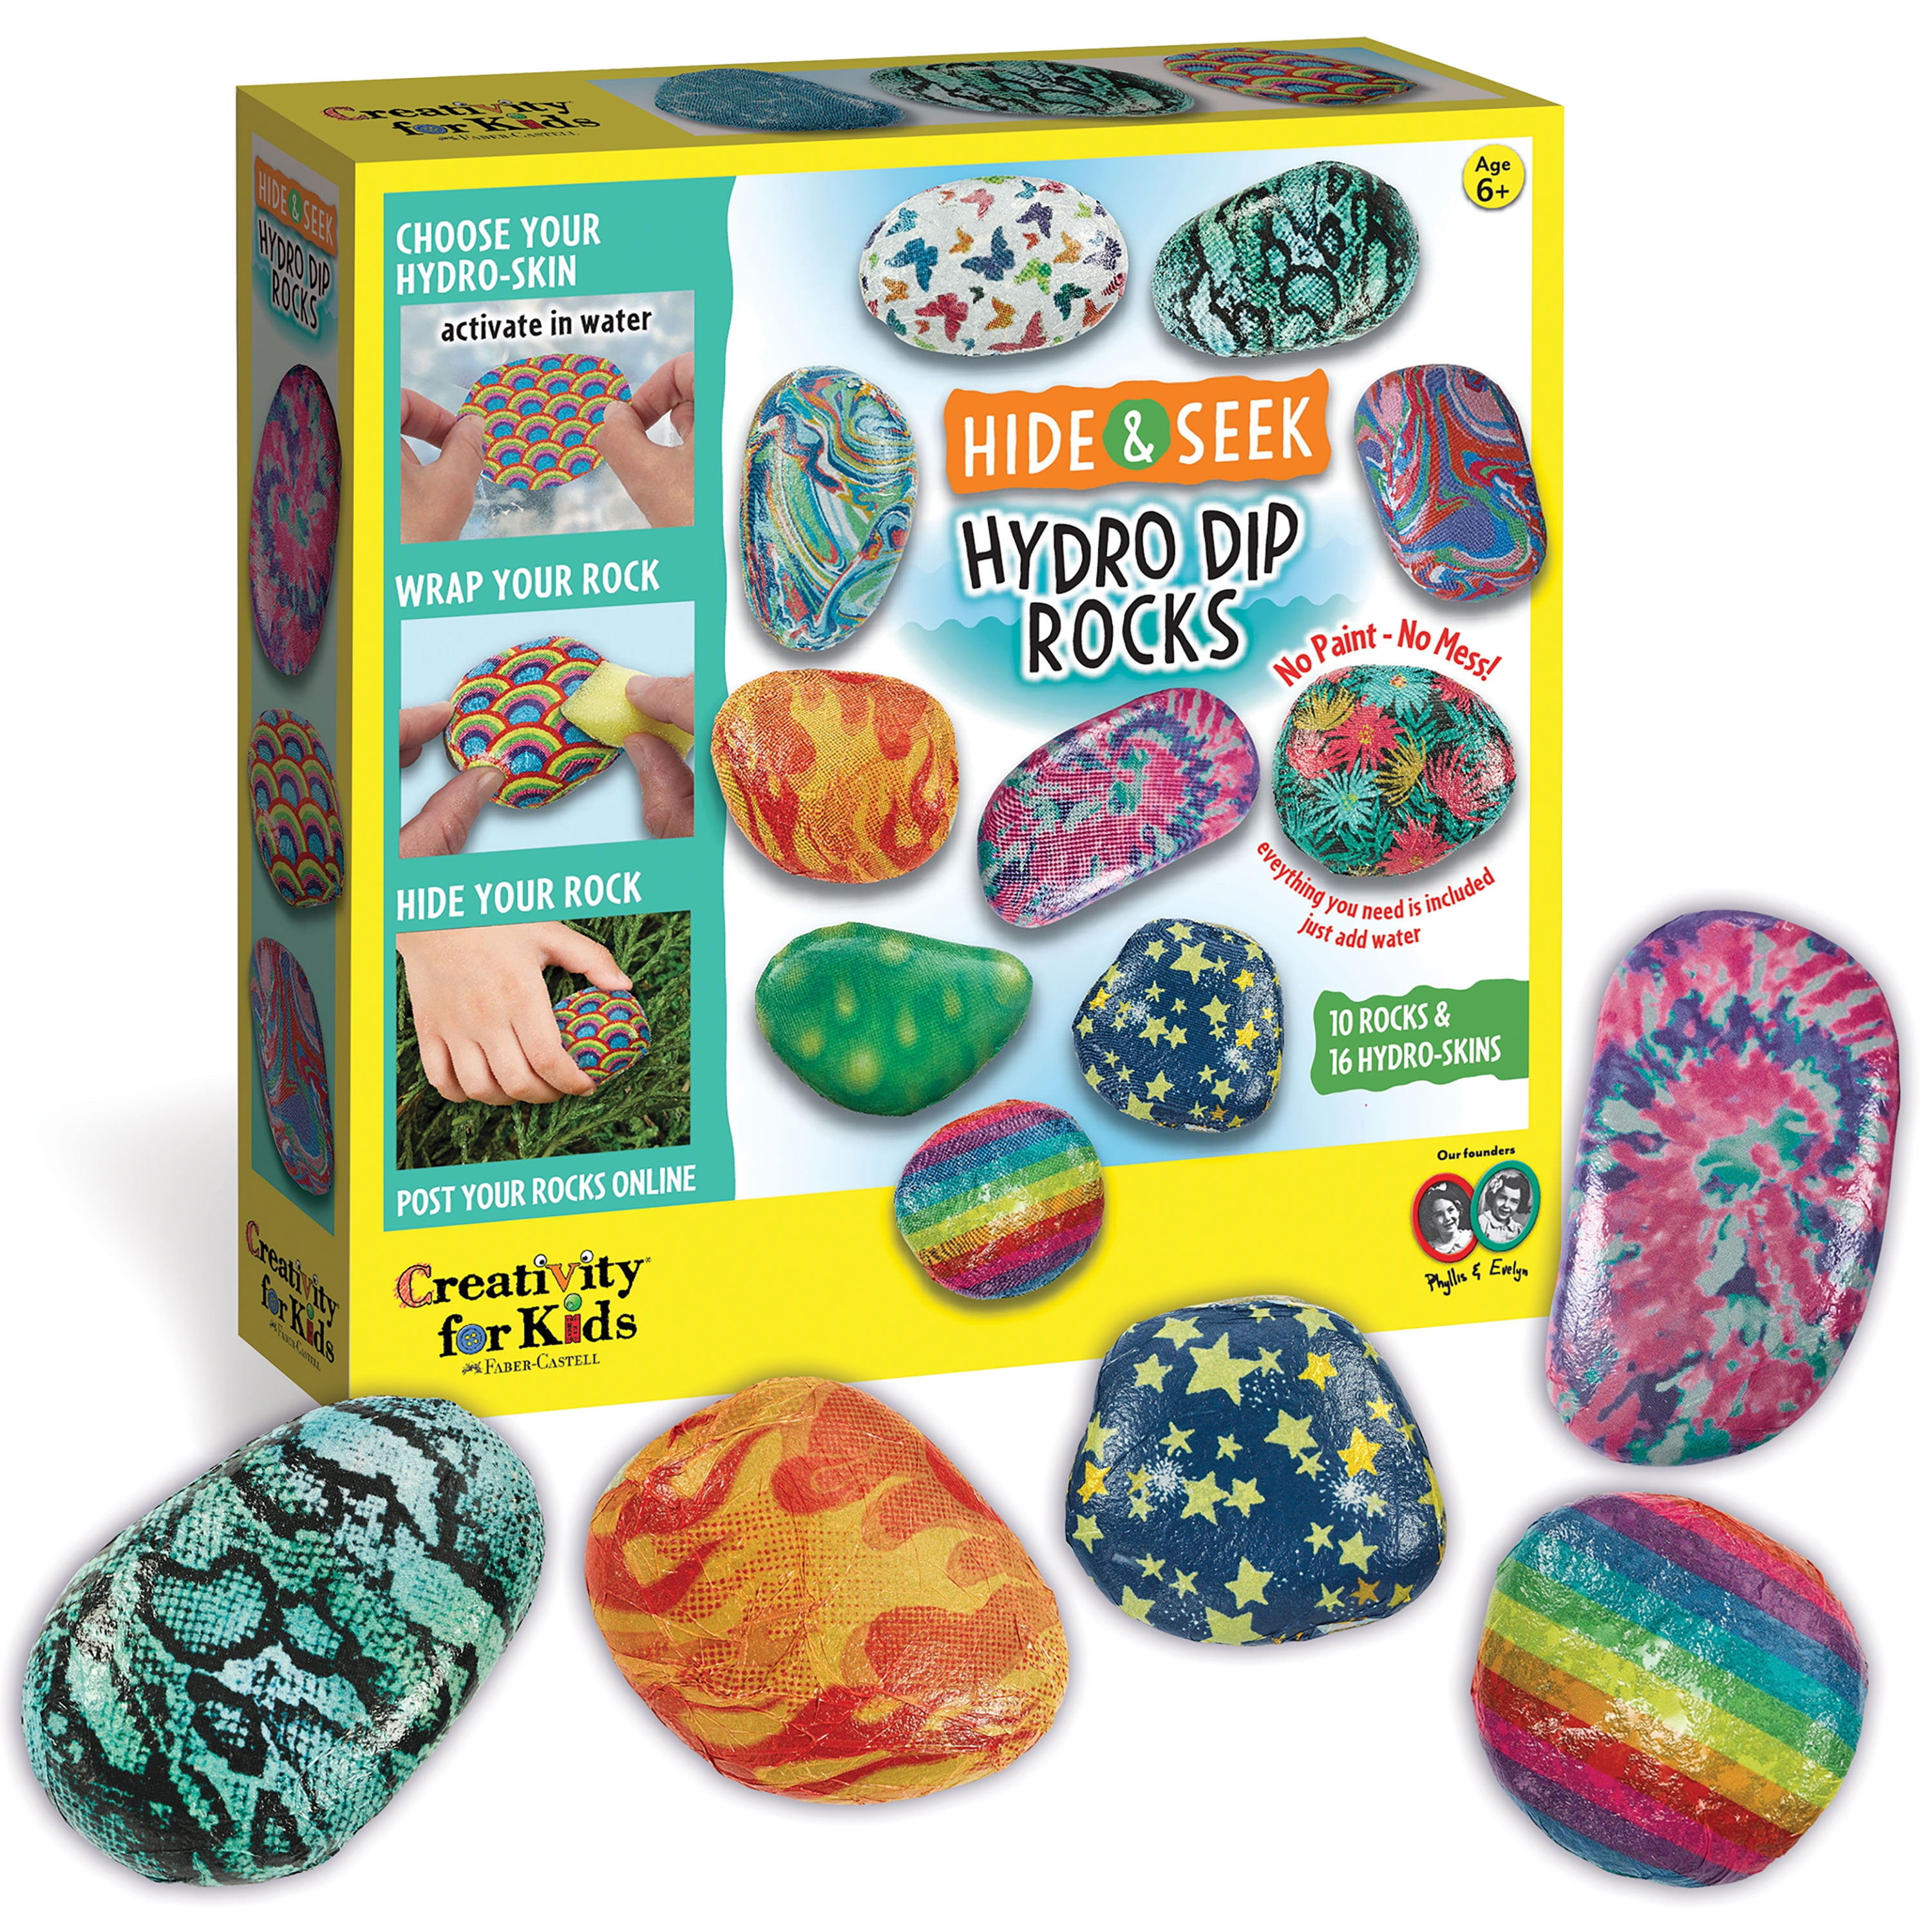 Arts & Crafts For Kids Creativity for Kids Hide & Seek Rock Painting Kit